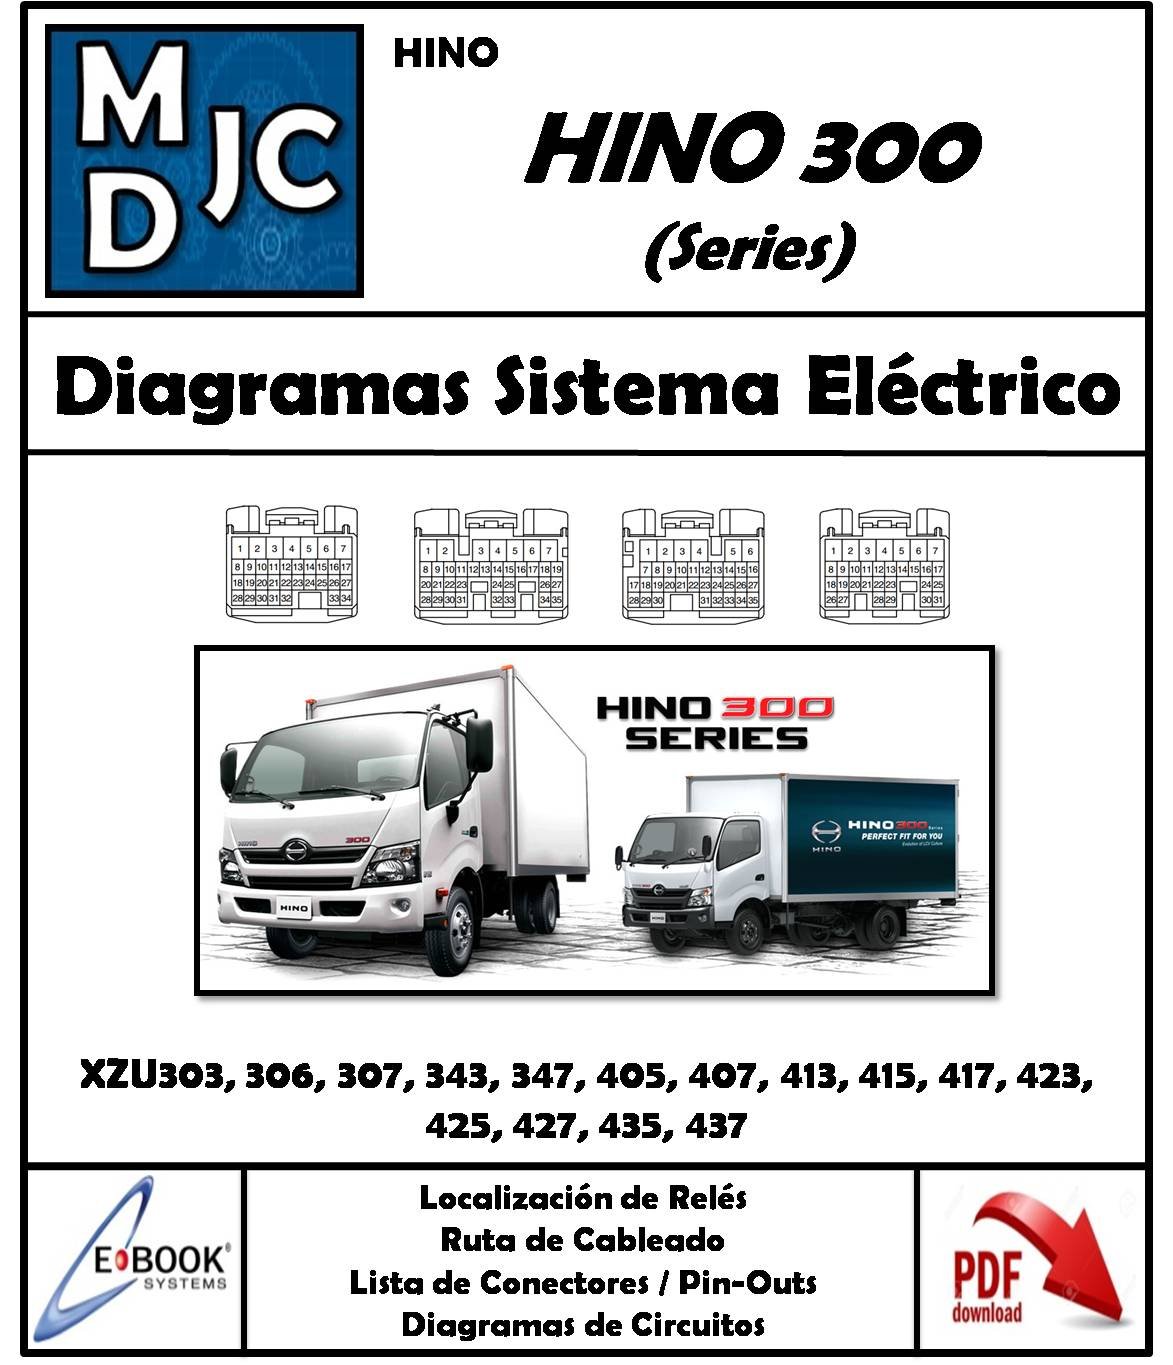 Manual Diagramas Sistema Electrico Hino  300 Series 300 / 400